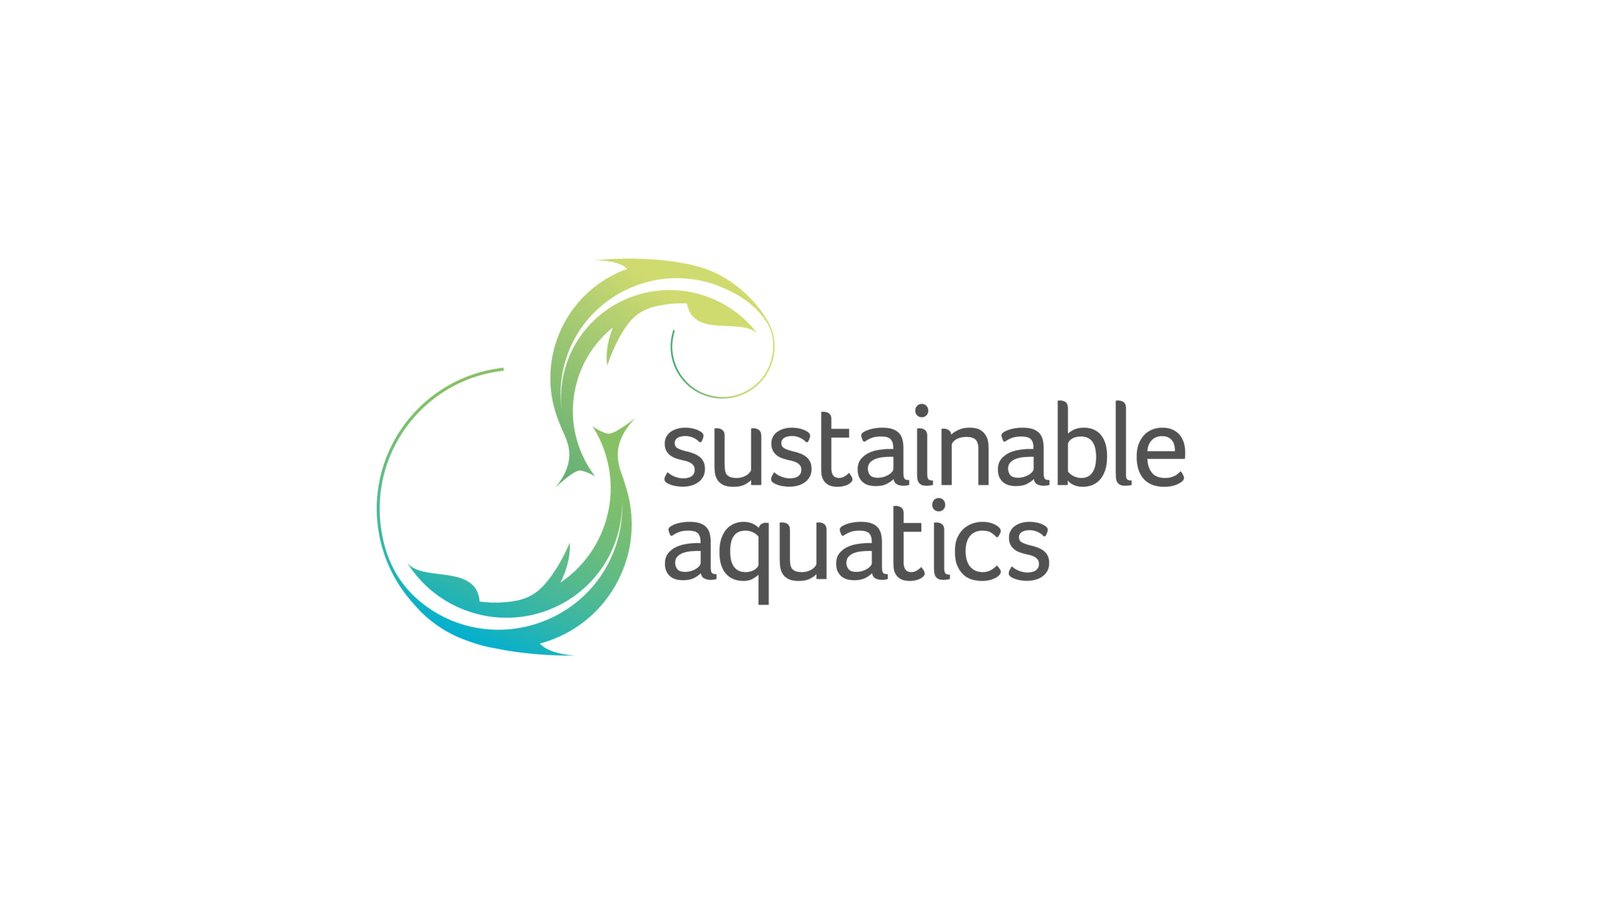 (c) Sustainableaquatics.co.uk